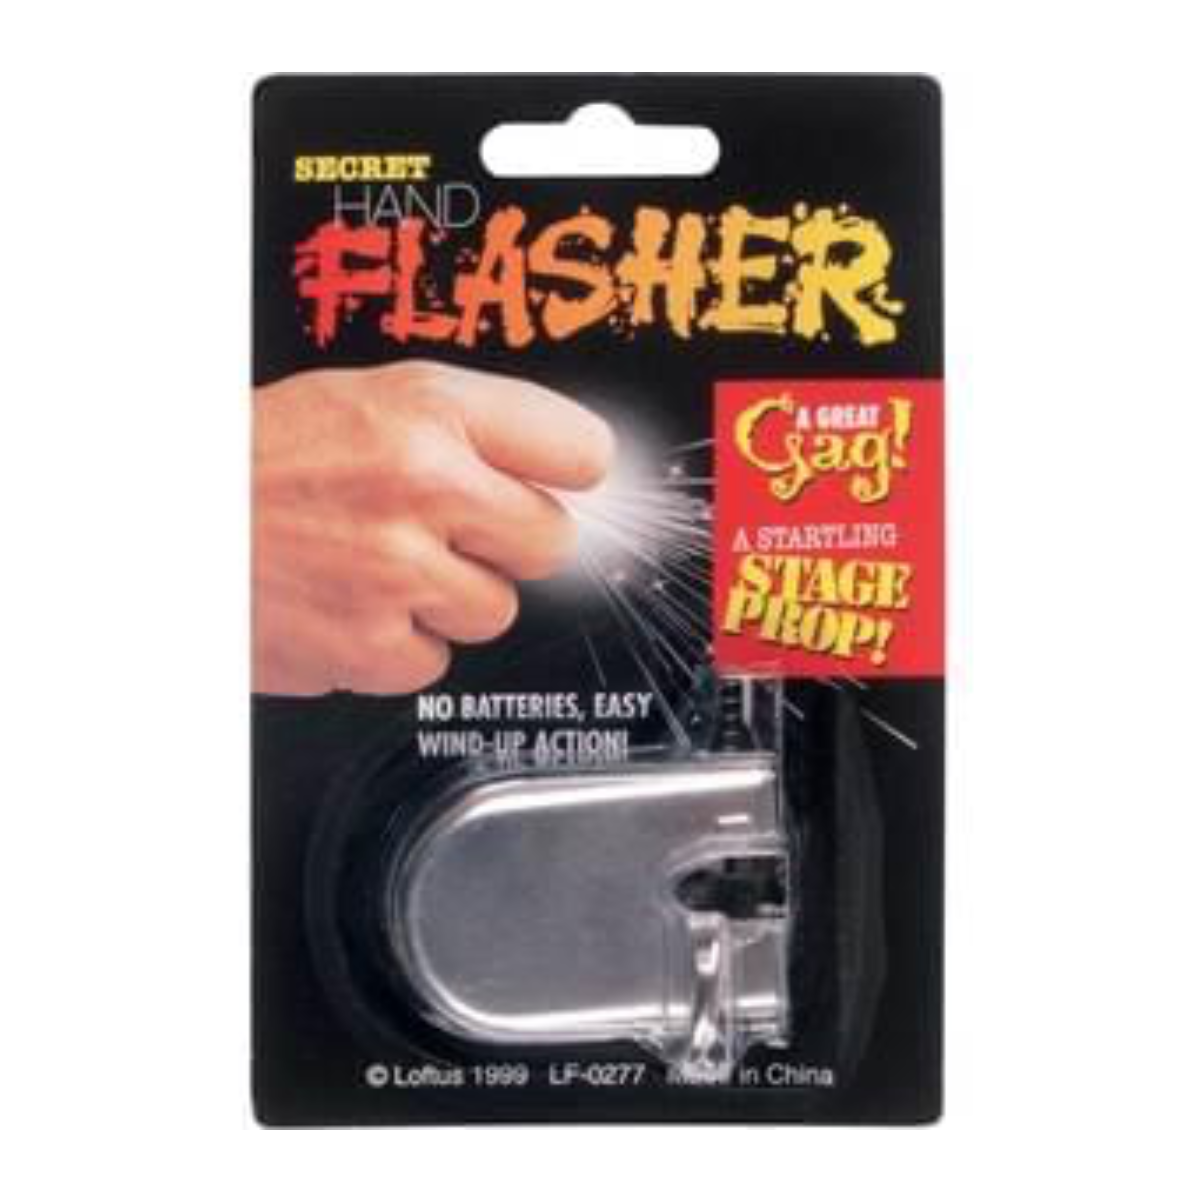 Hand Flasher Trick